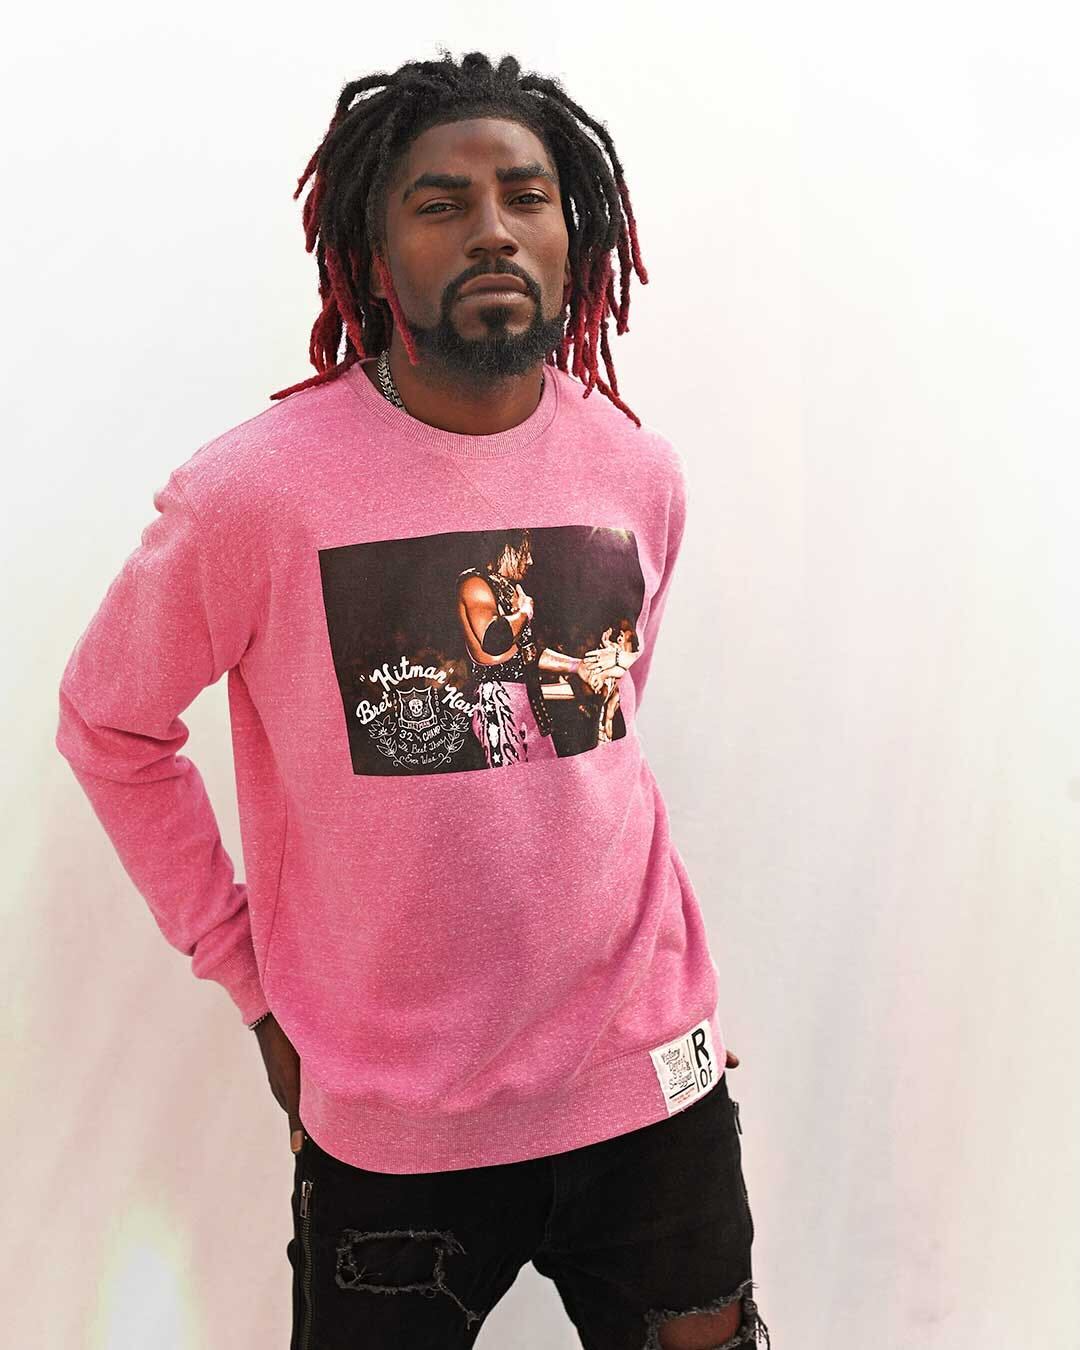 Bret Hart Retro Photo Pink Sweatshirt - Roots of Fight Canada